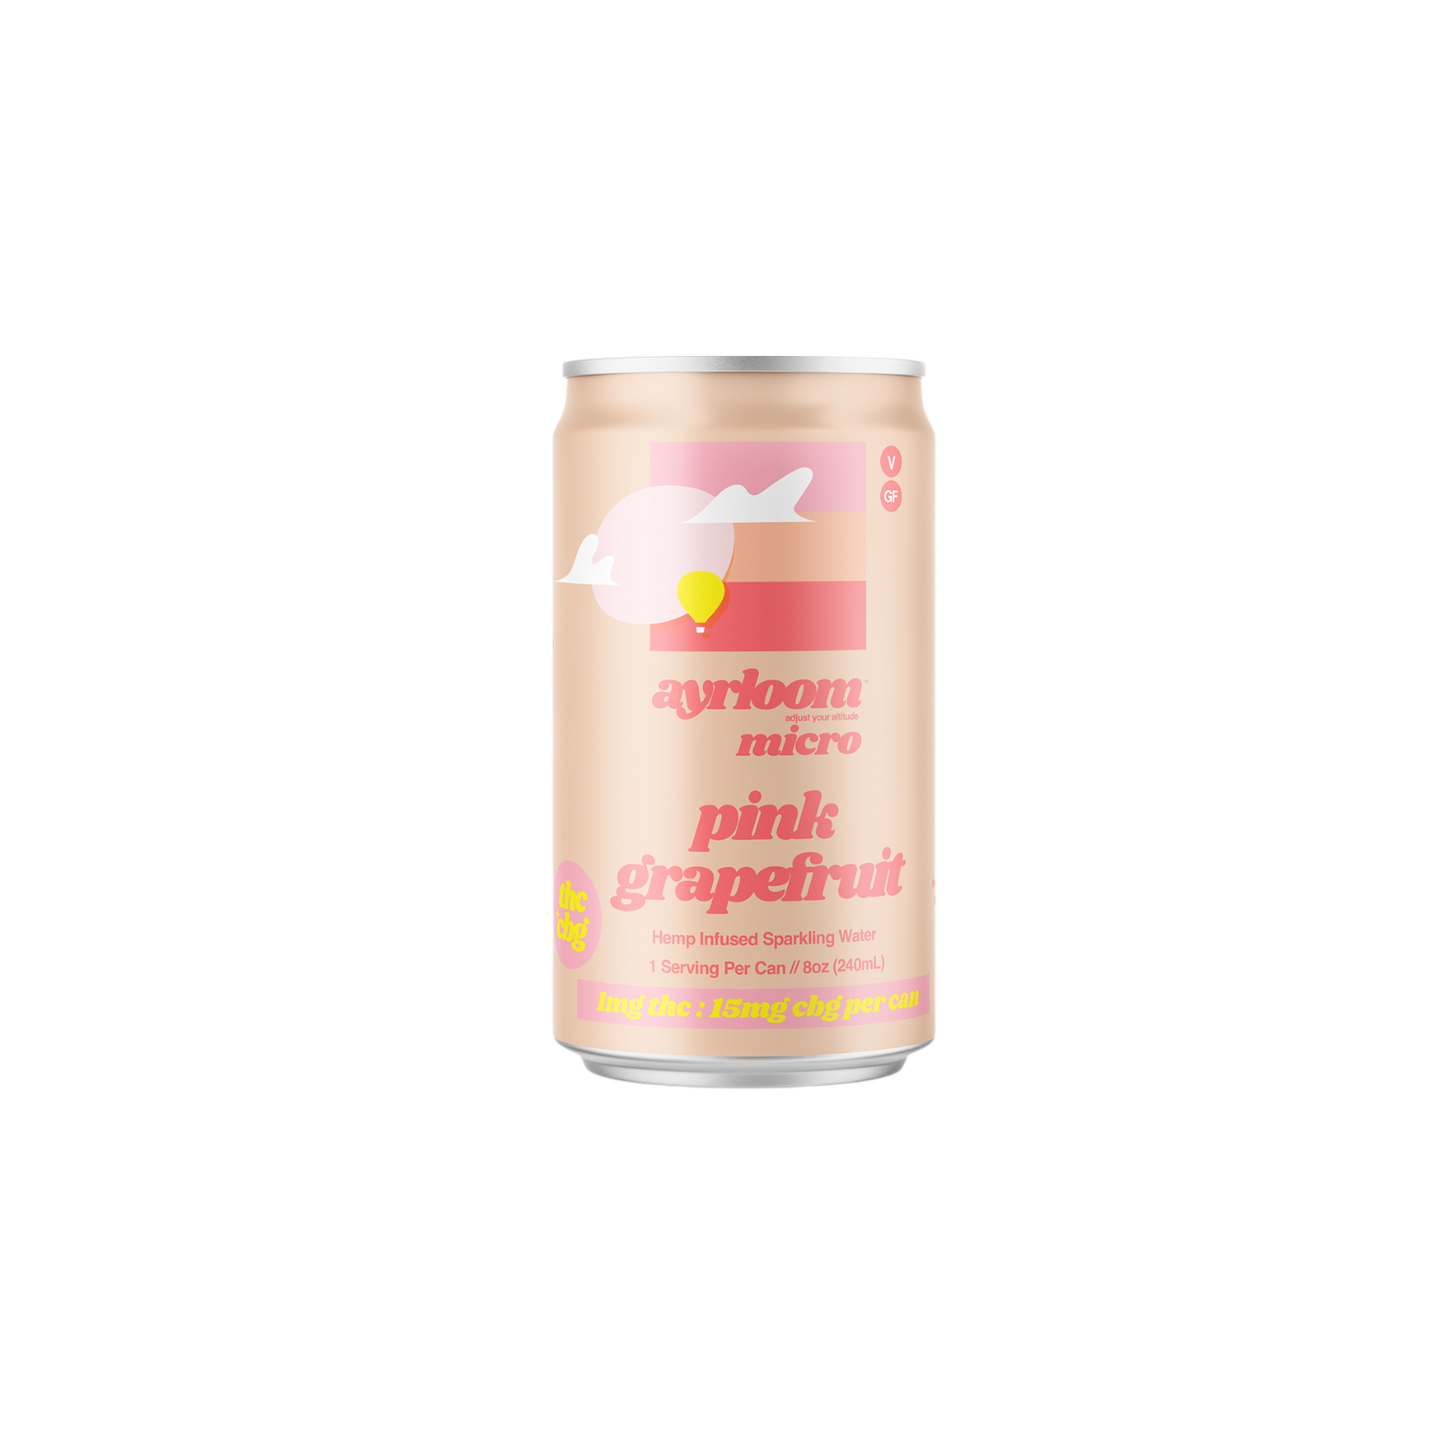 ayrloom ™ micro Pink Grapefruit Sparkling Water